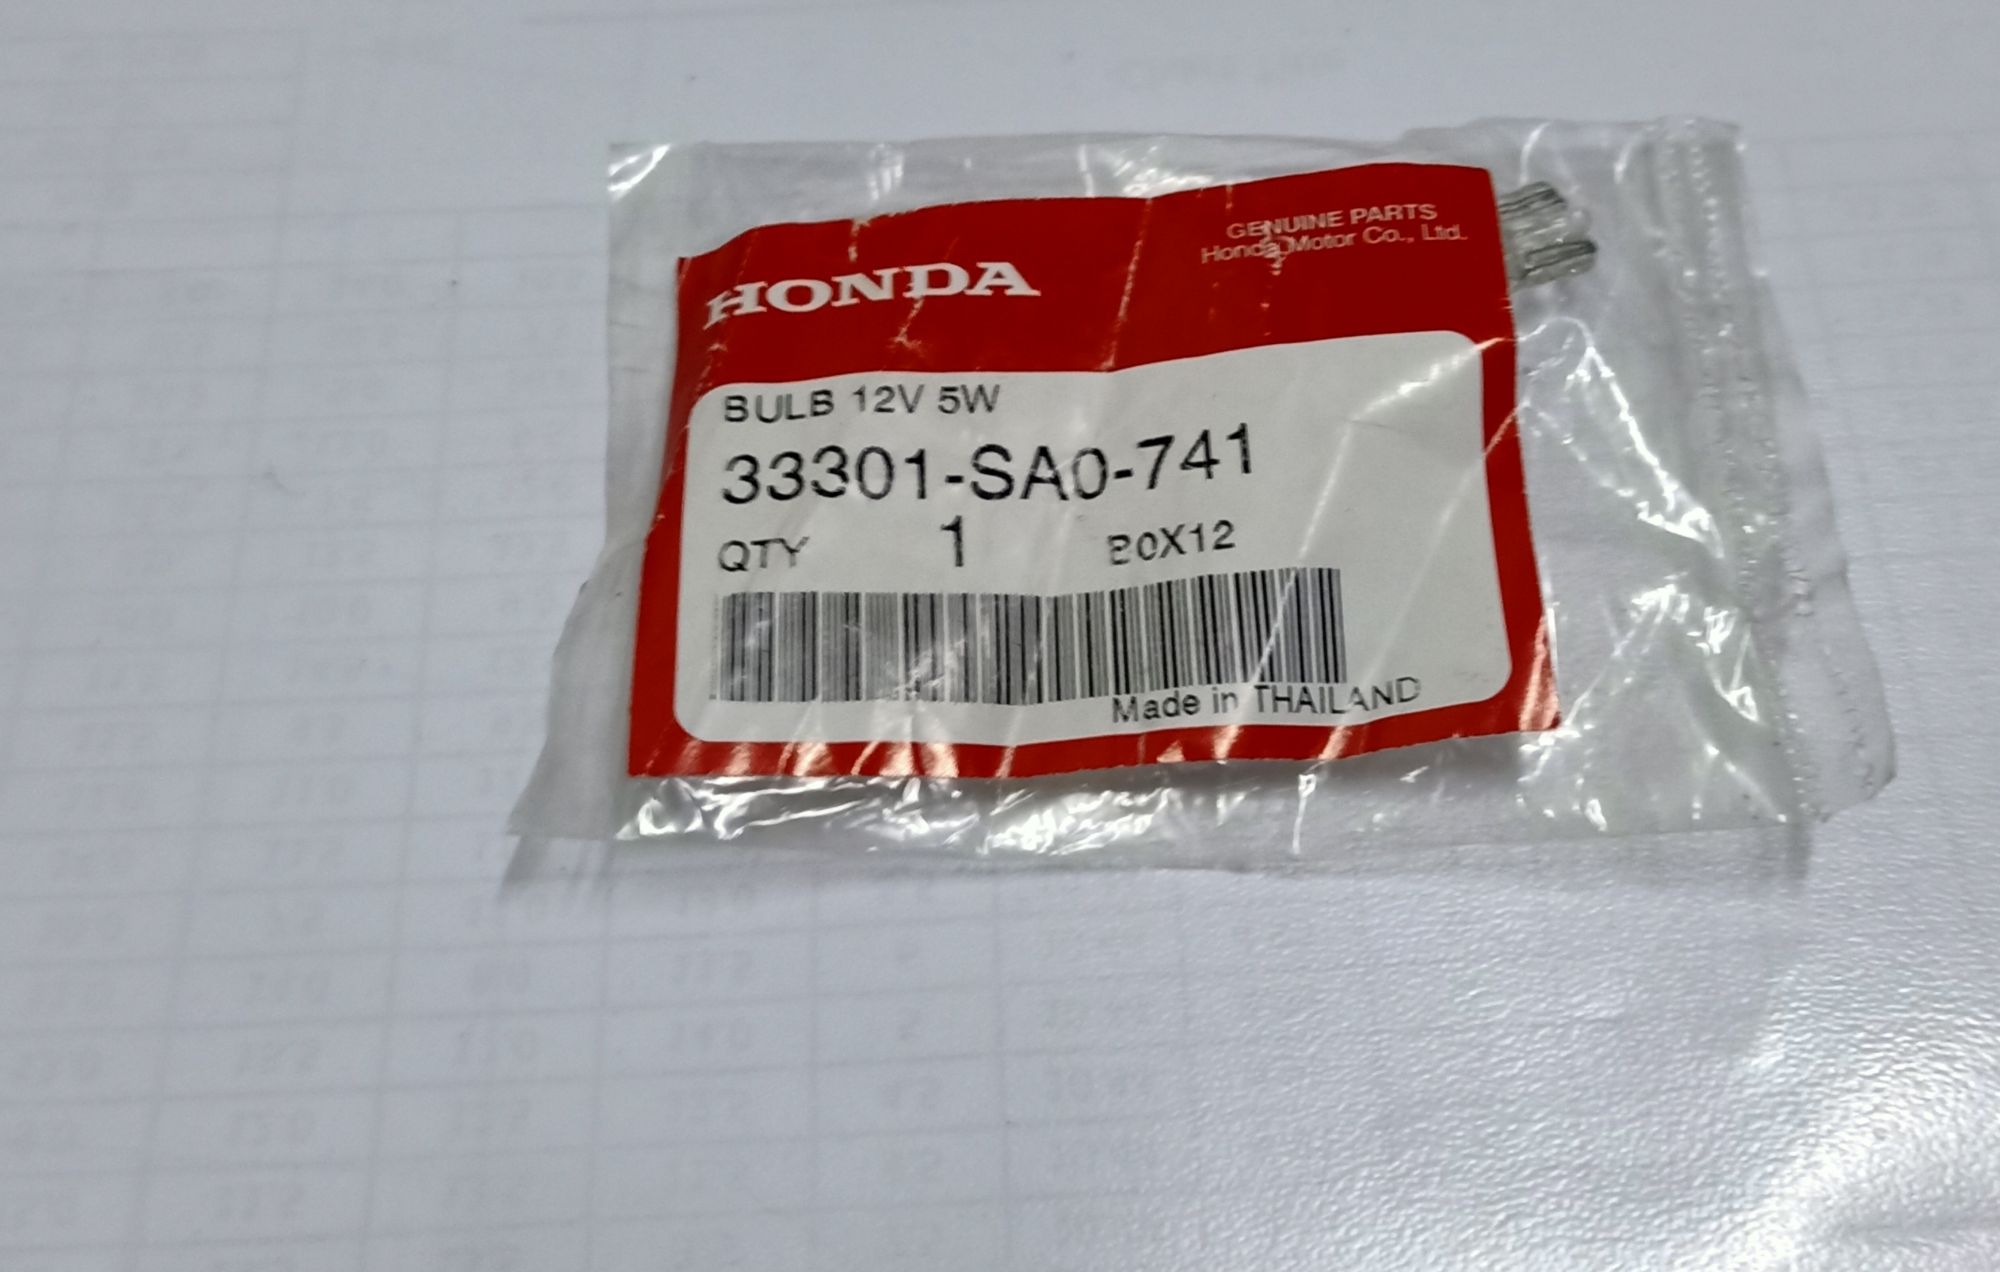 Honda 33301-SA0-741